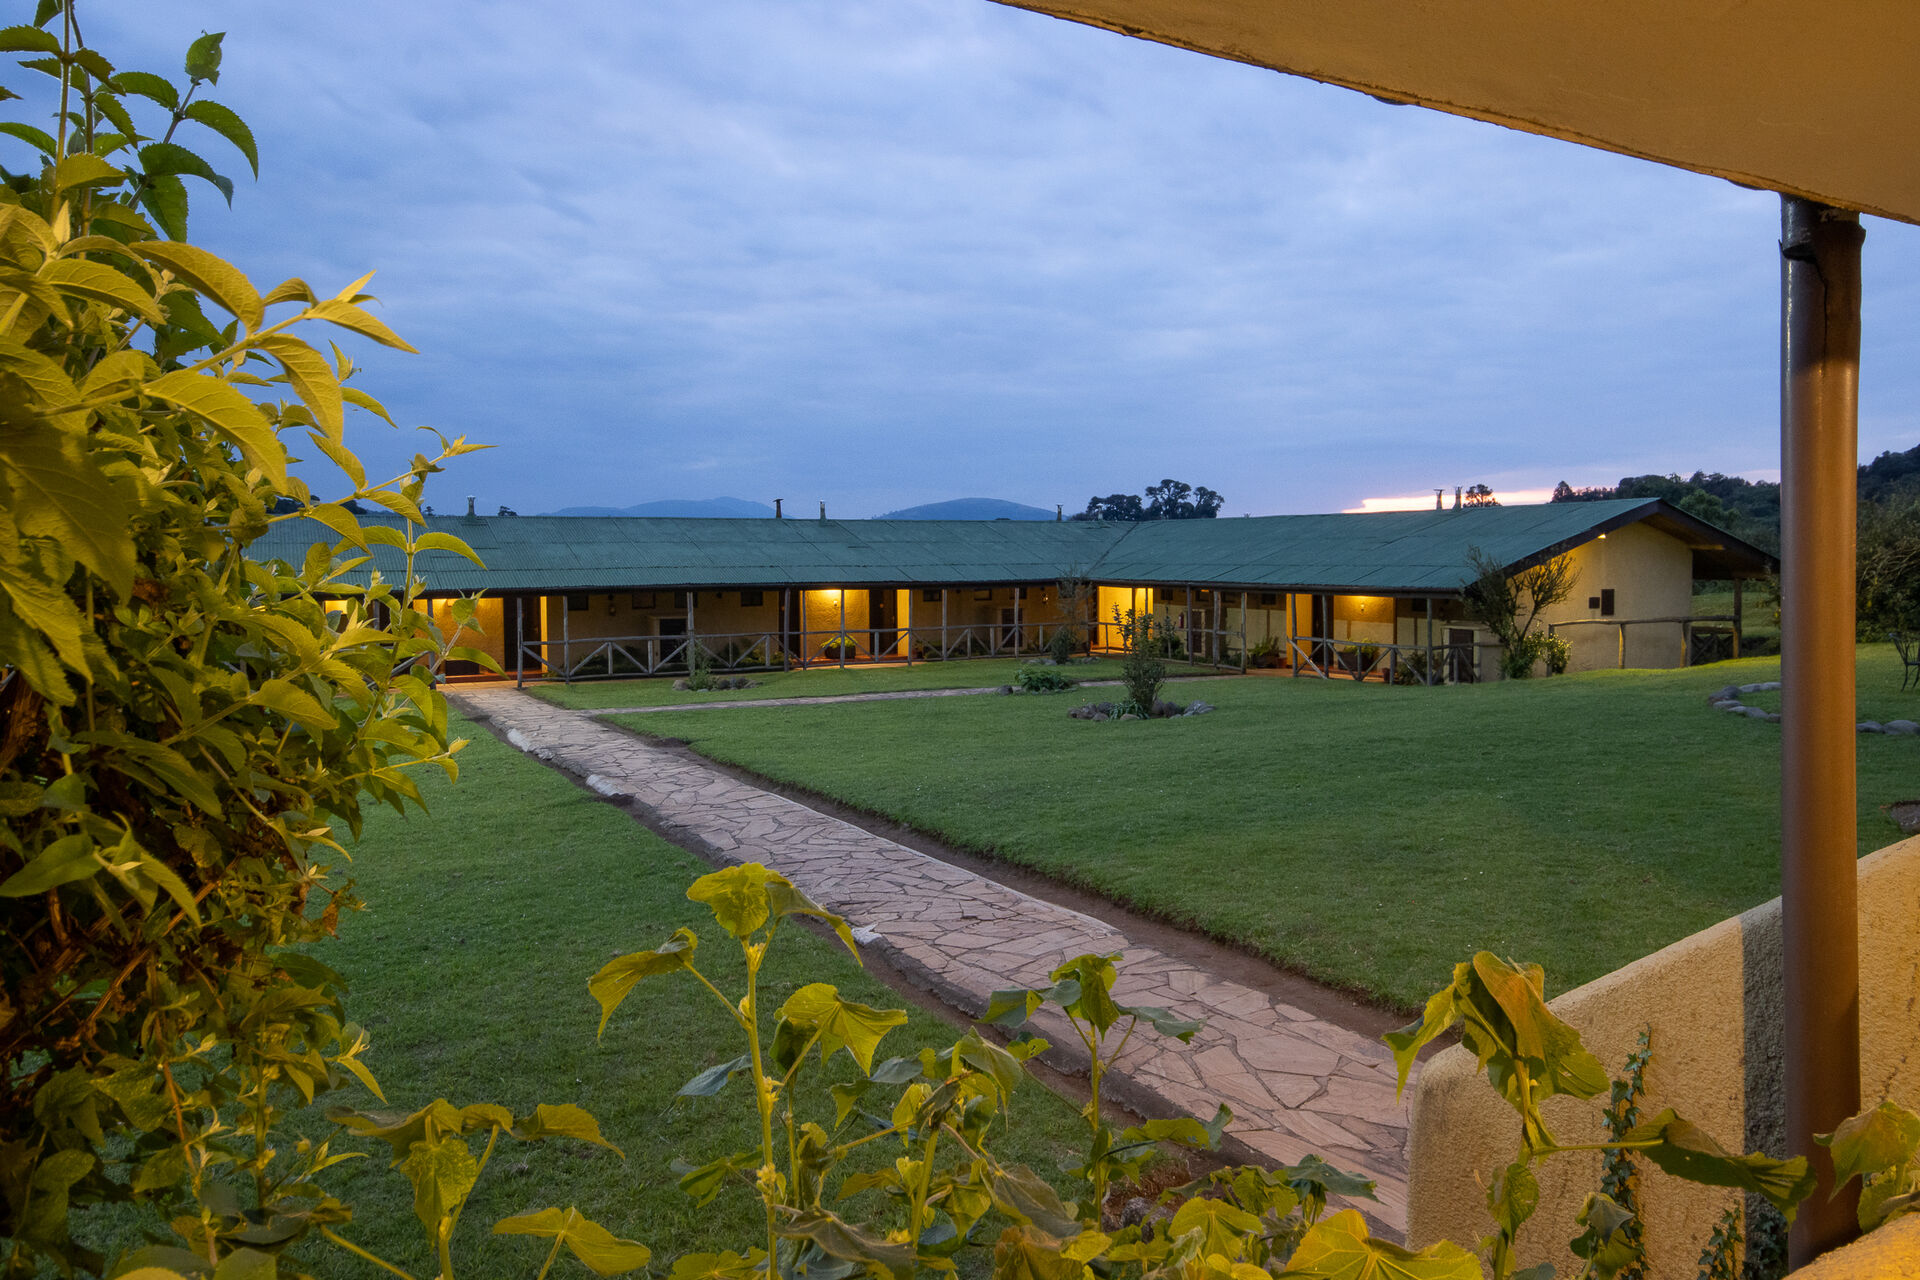 Accommodations at Ngorongoro Crater